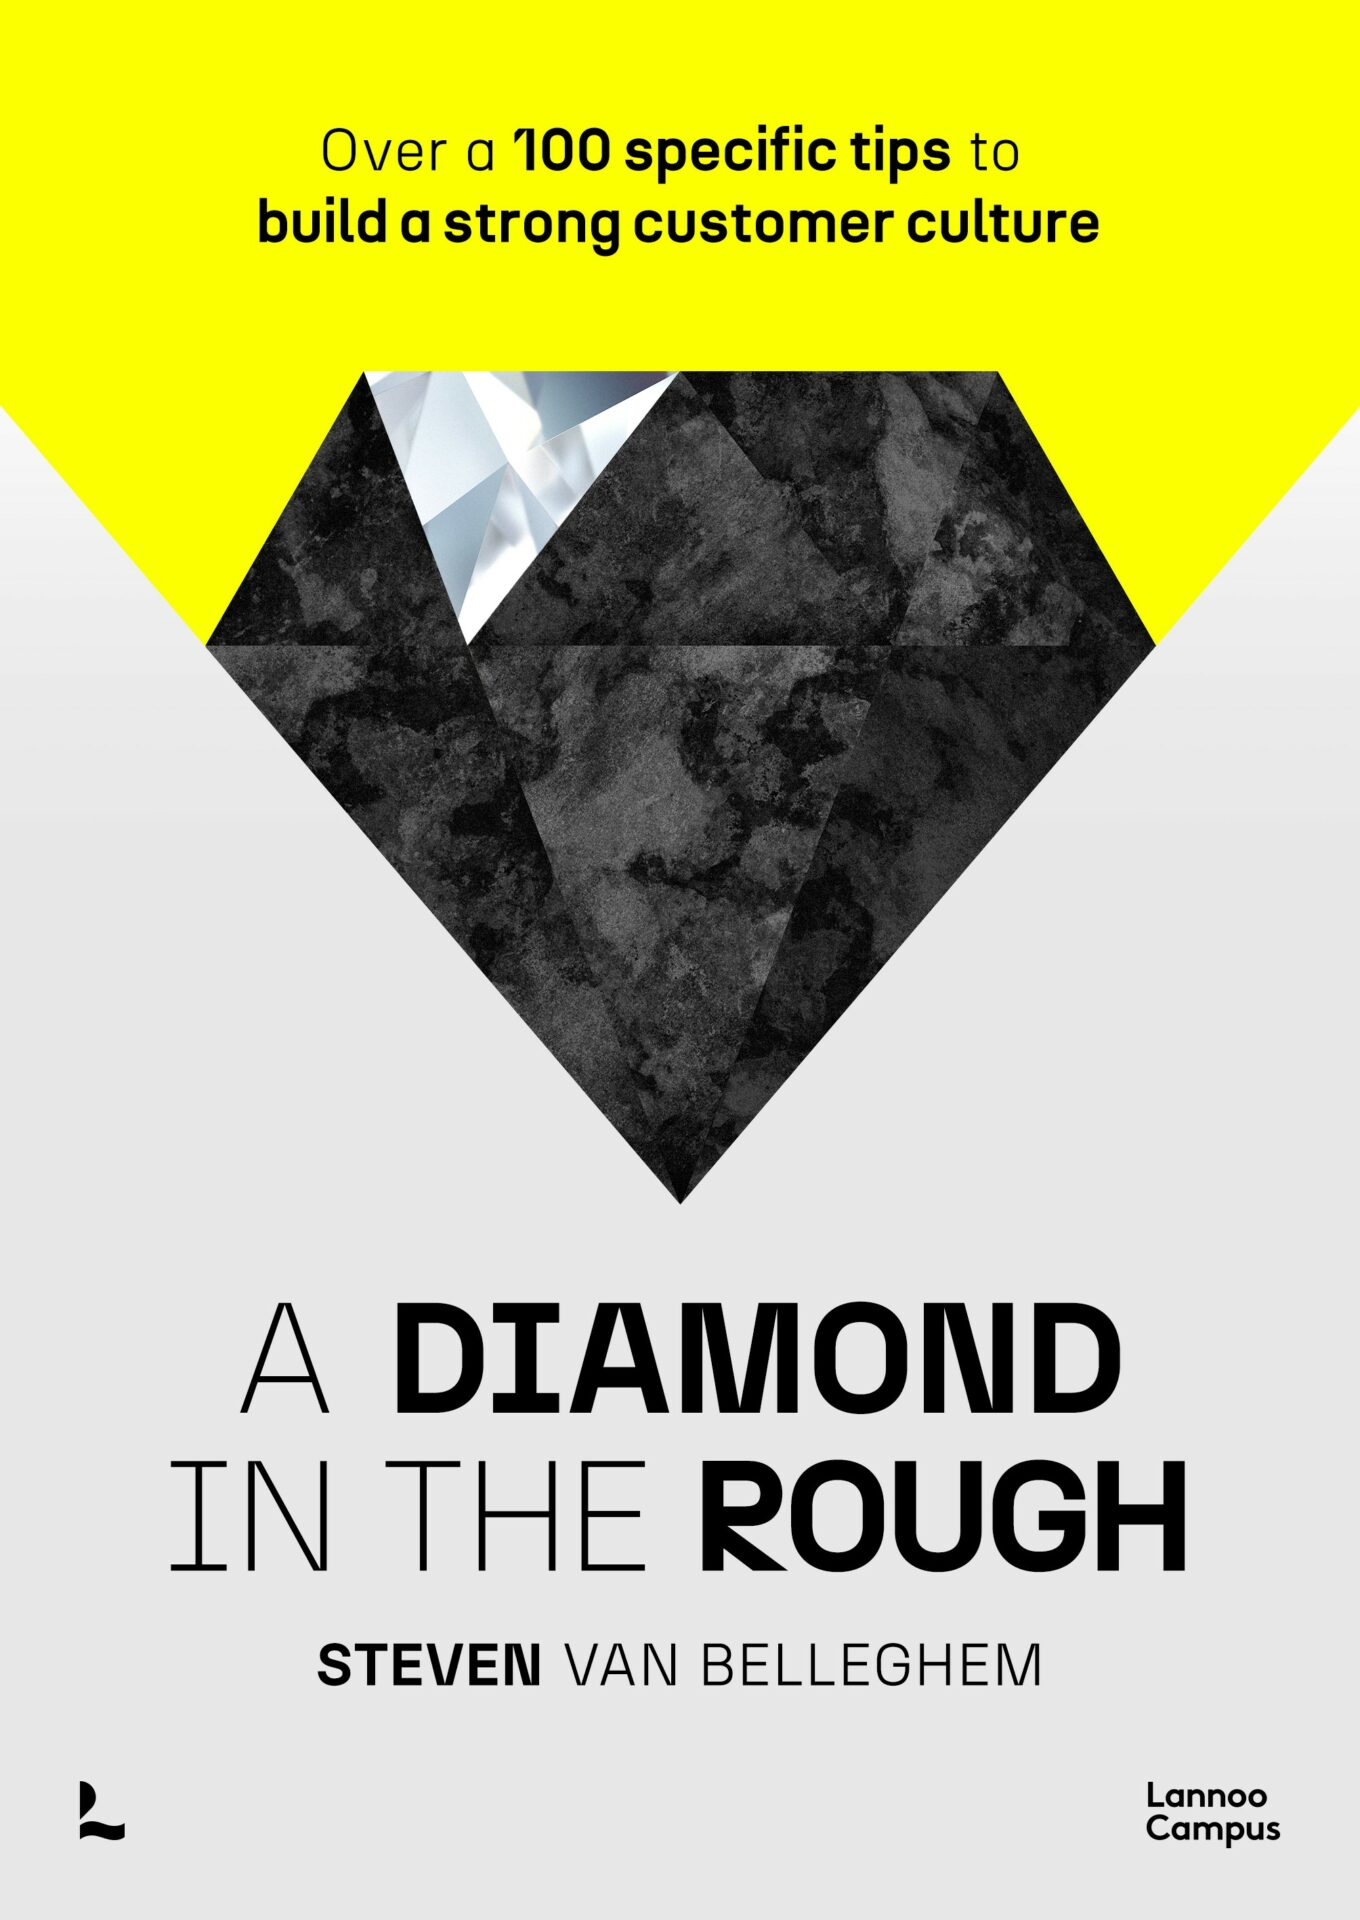 A Diamond in the Rough in the AMBA Book Club